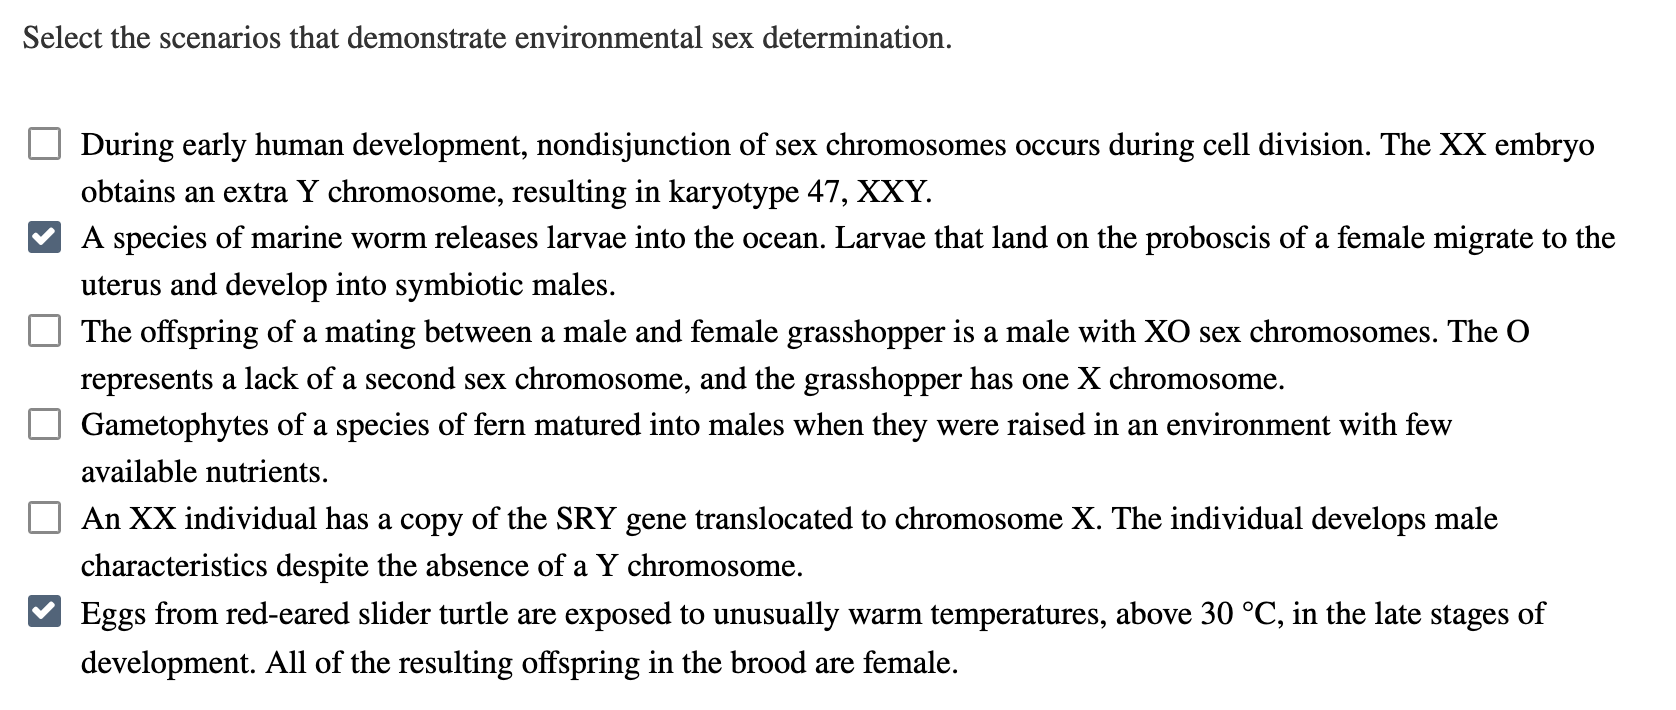 environmental sex determination